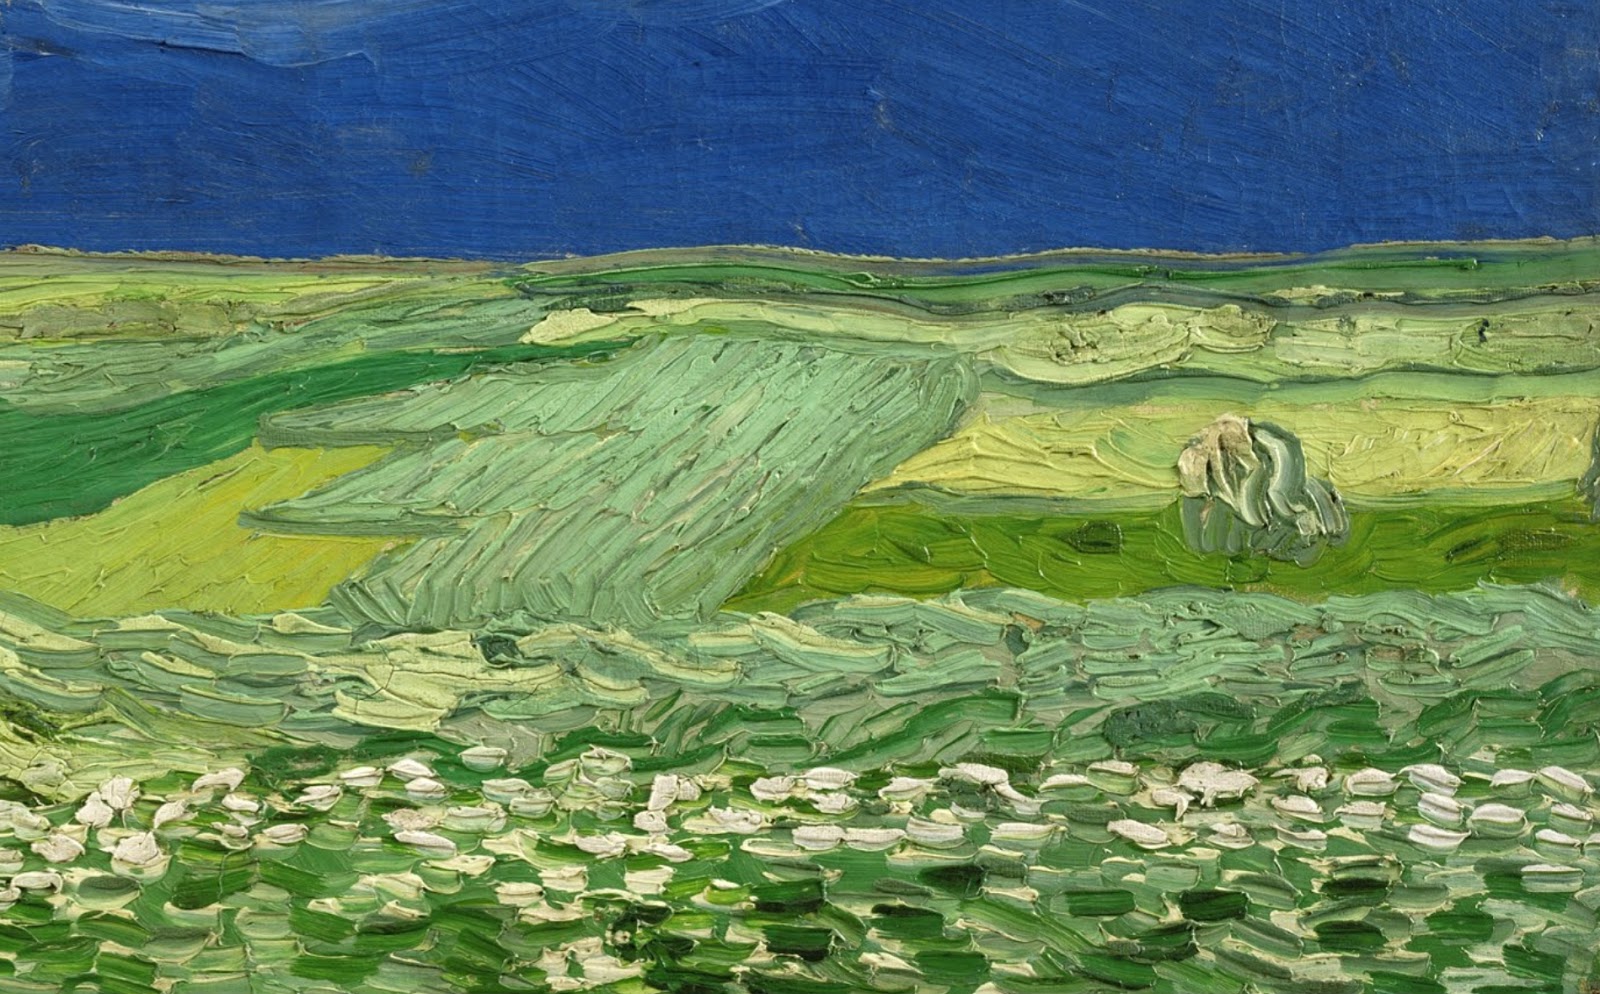 Vincent+Van+Gogh-1853-1890 (891).jpg